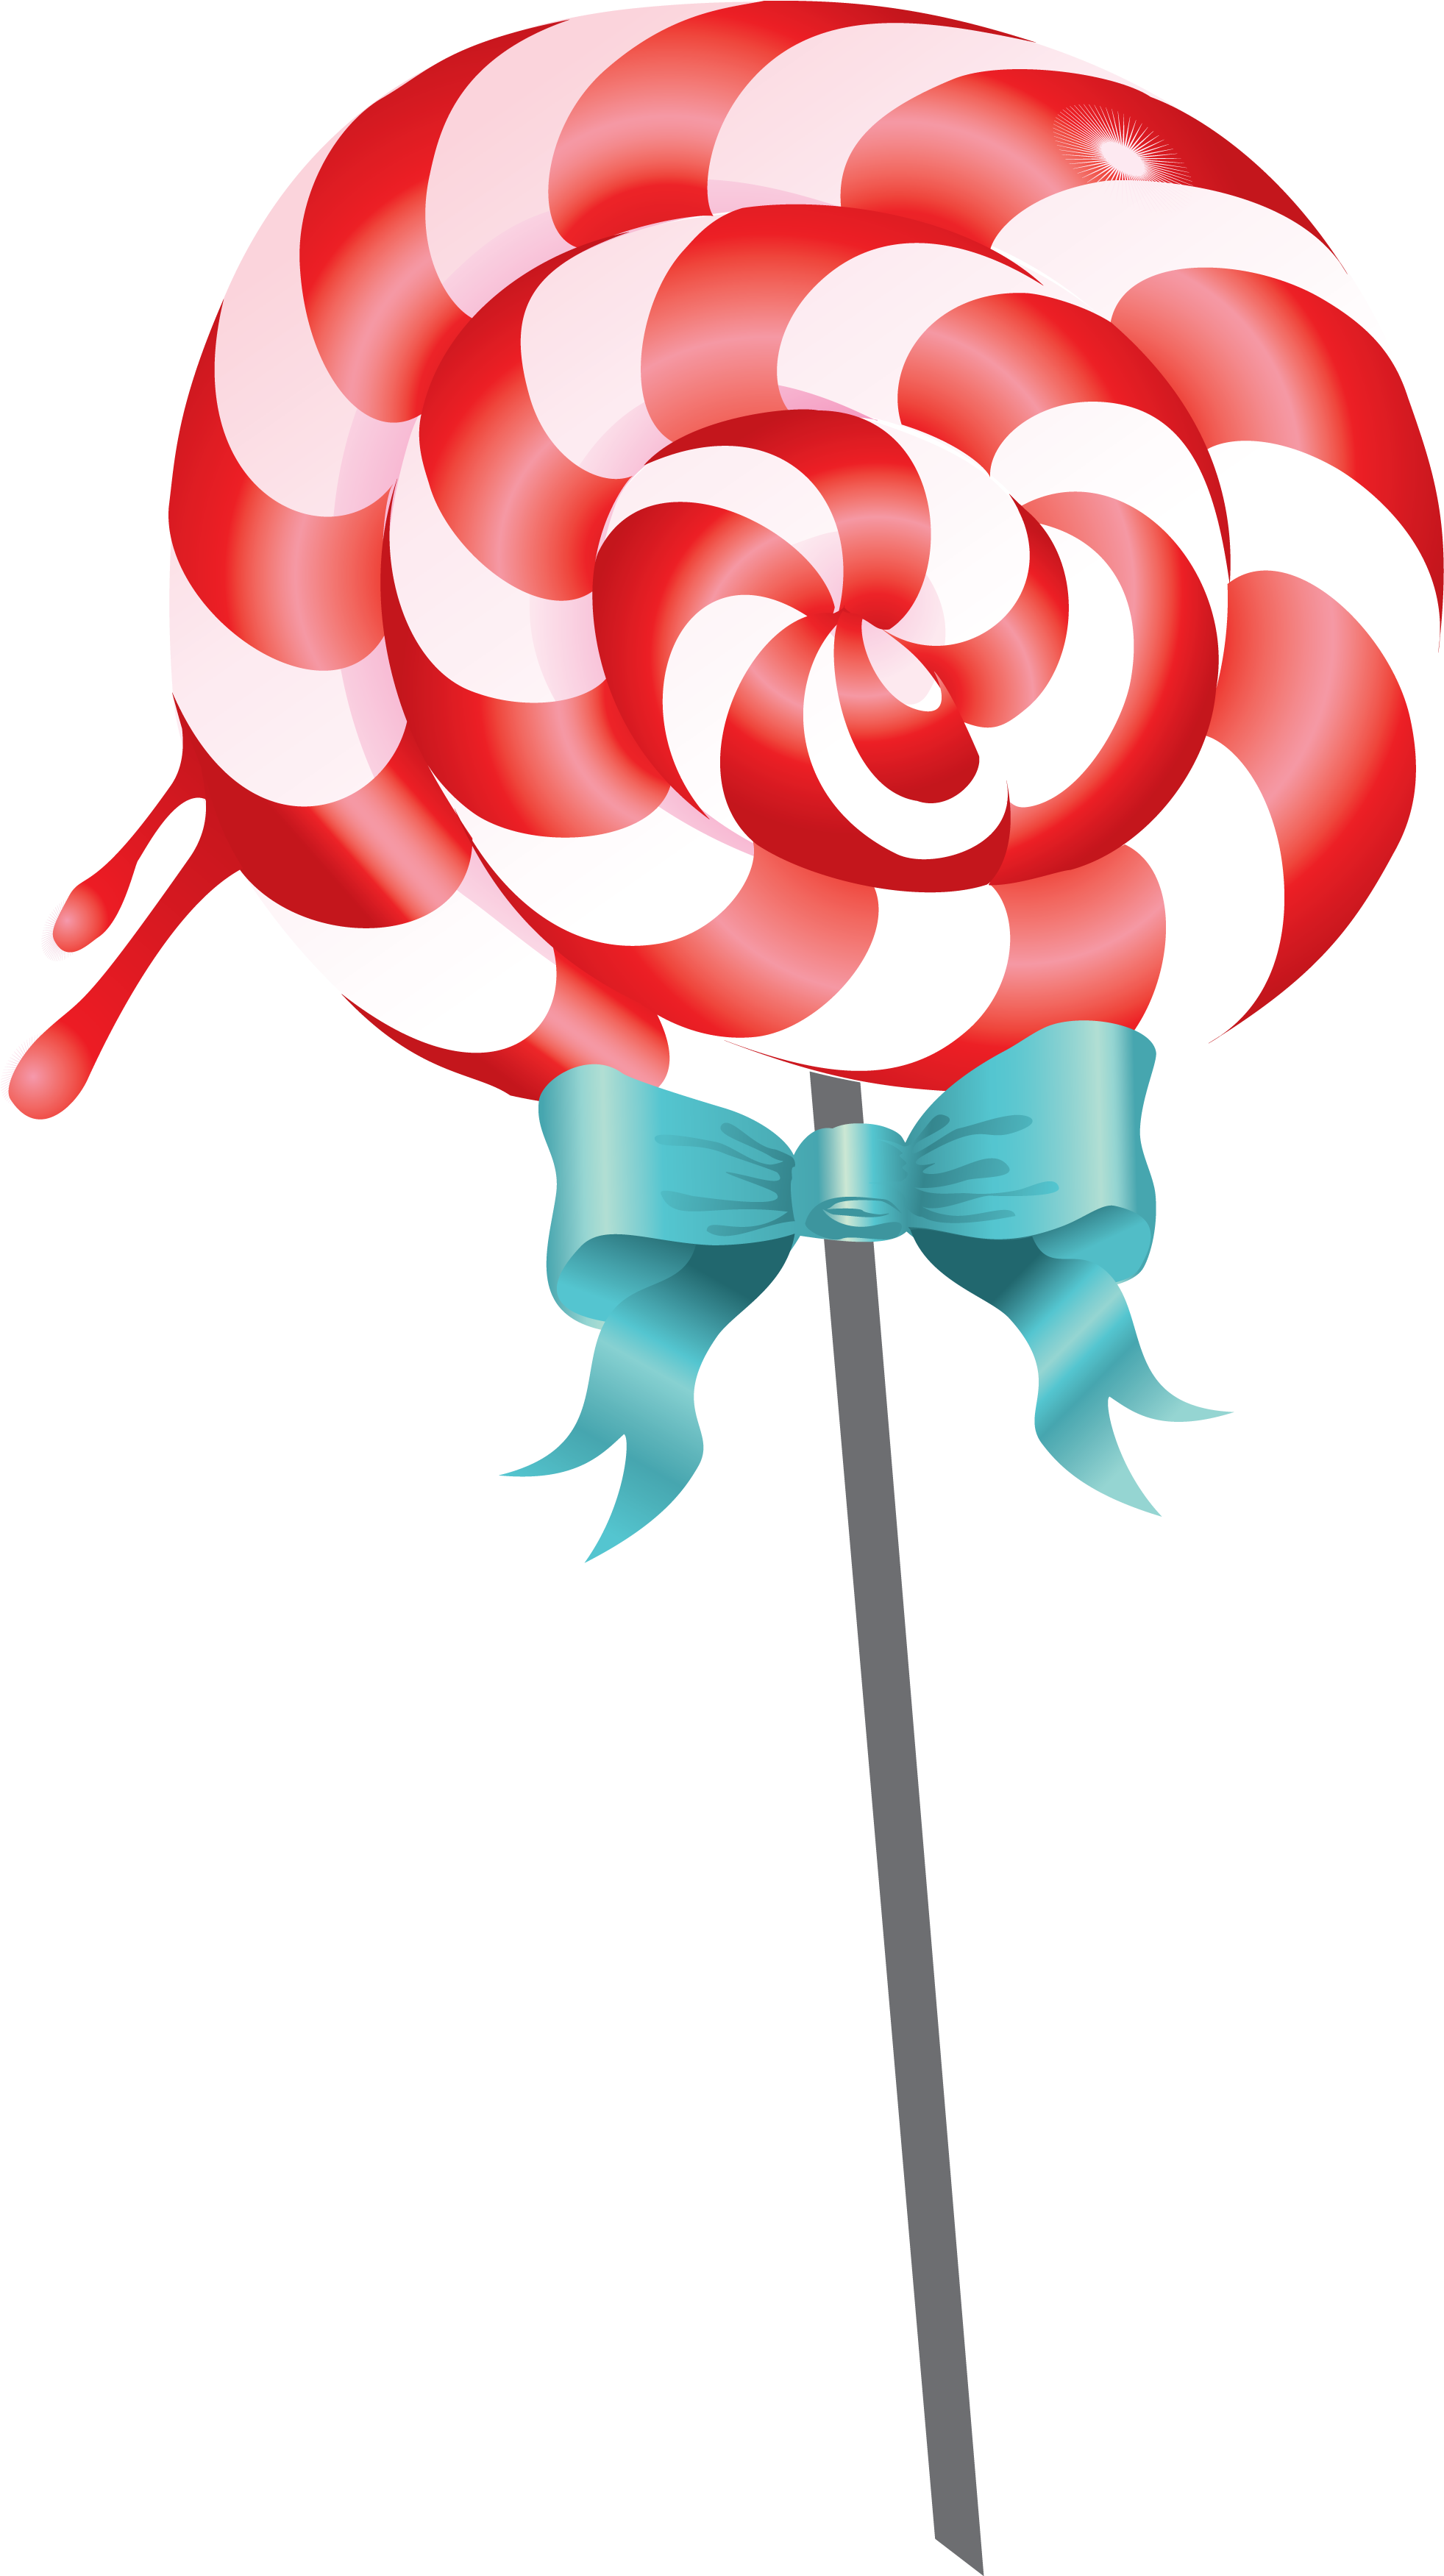 Download - Lollipop Background (1998x3501)